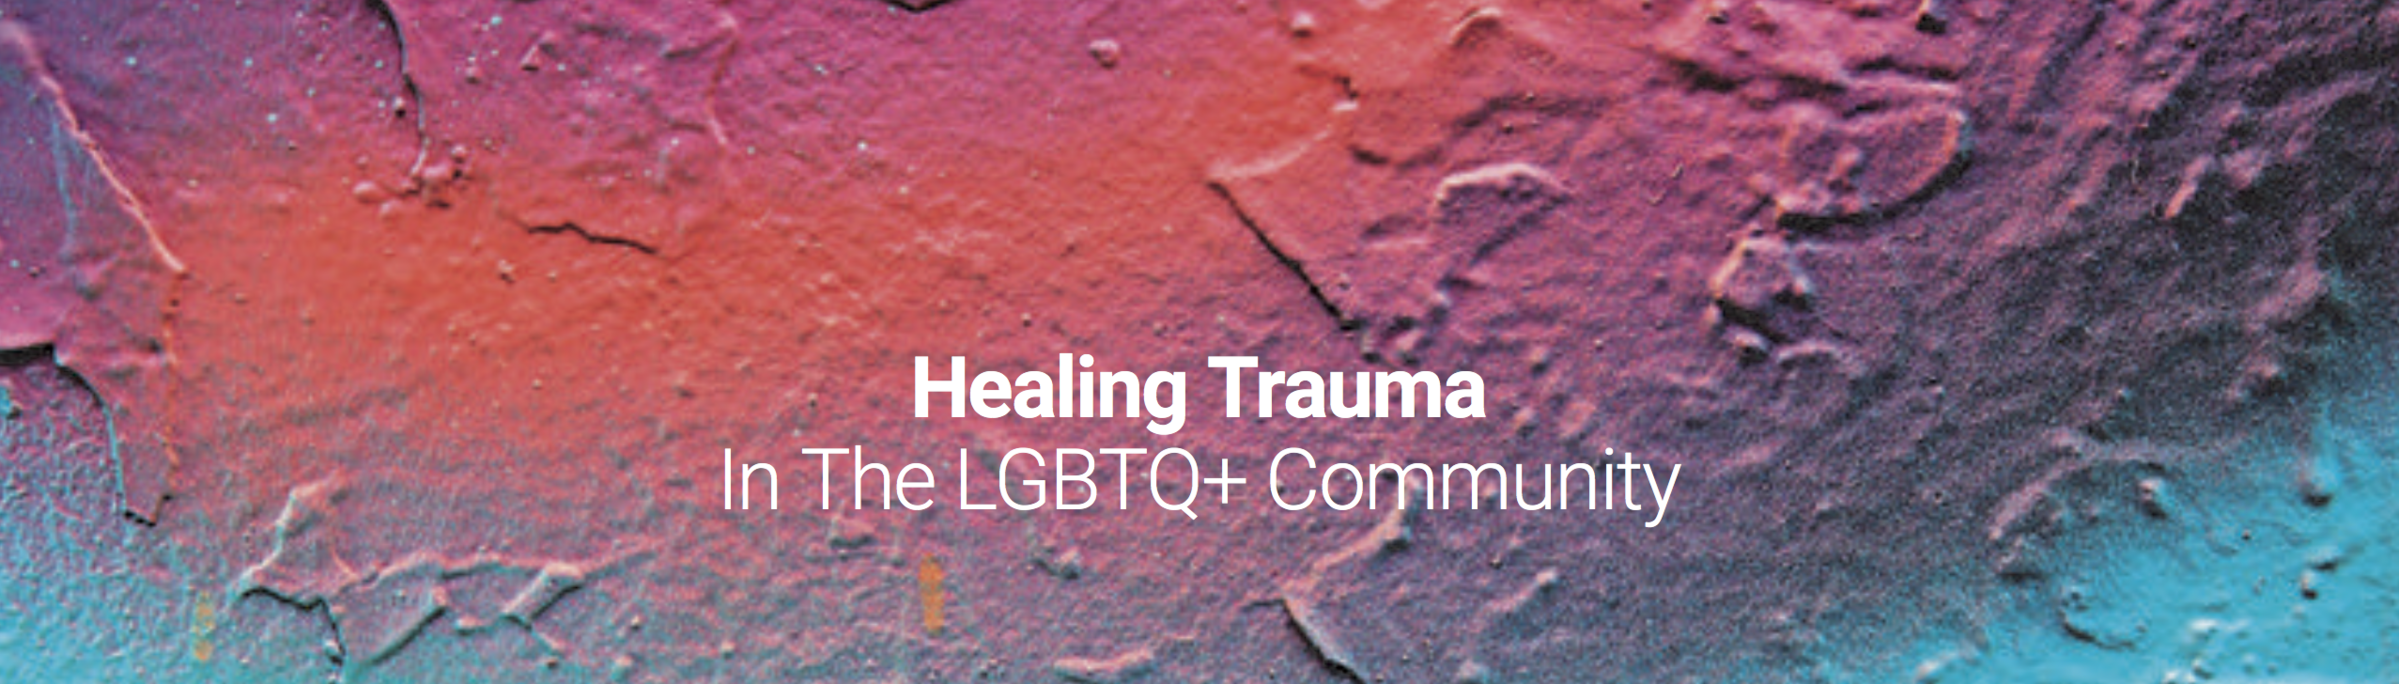 Healing Trauma In The LGBTQ+ Community